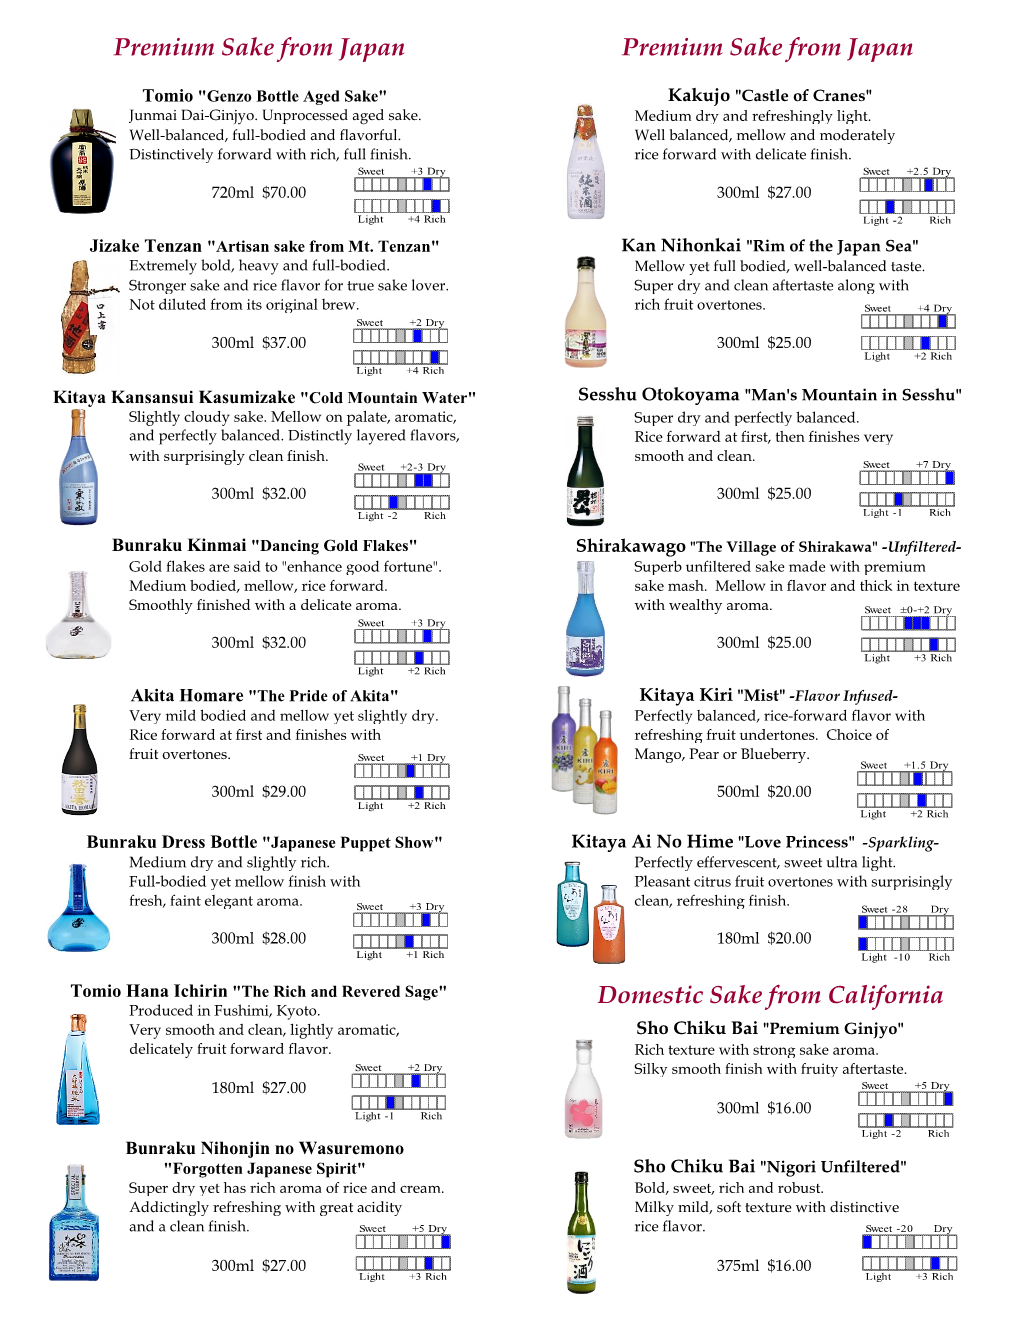 Domestic Sake from California Premium Sake from Japan Premium Sake from Japan